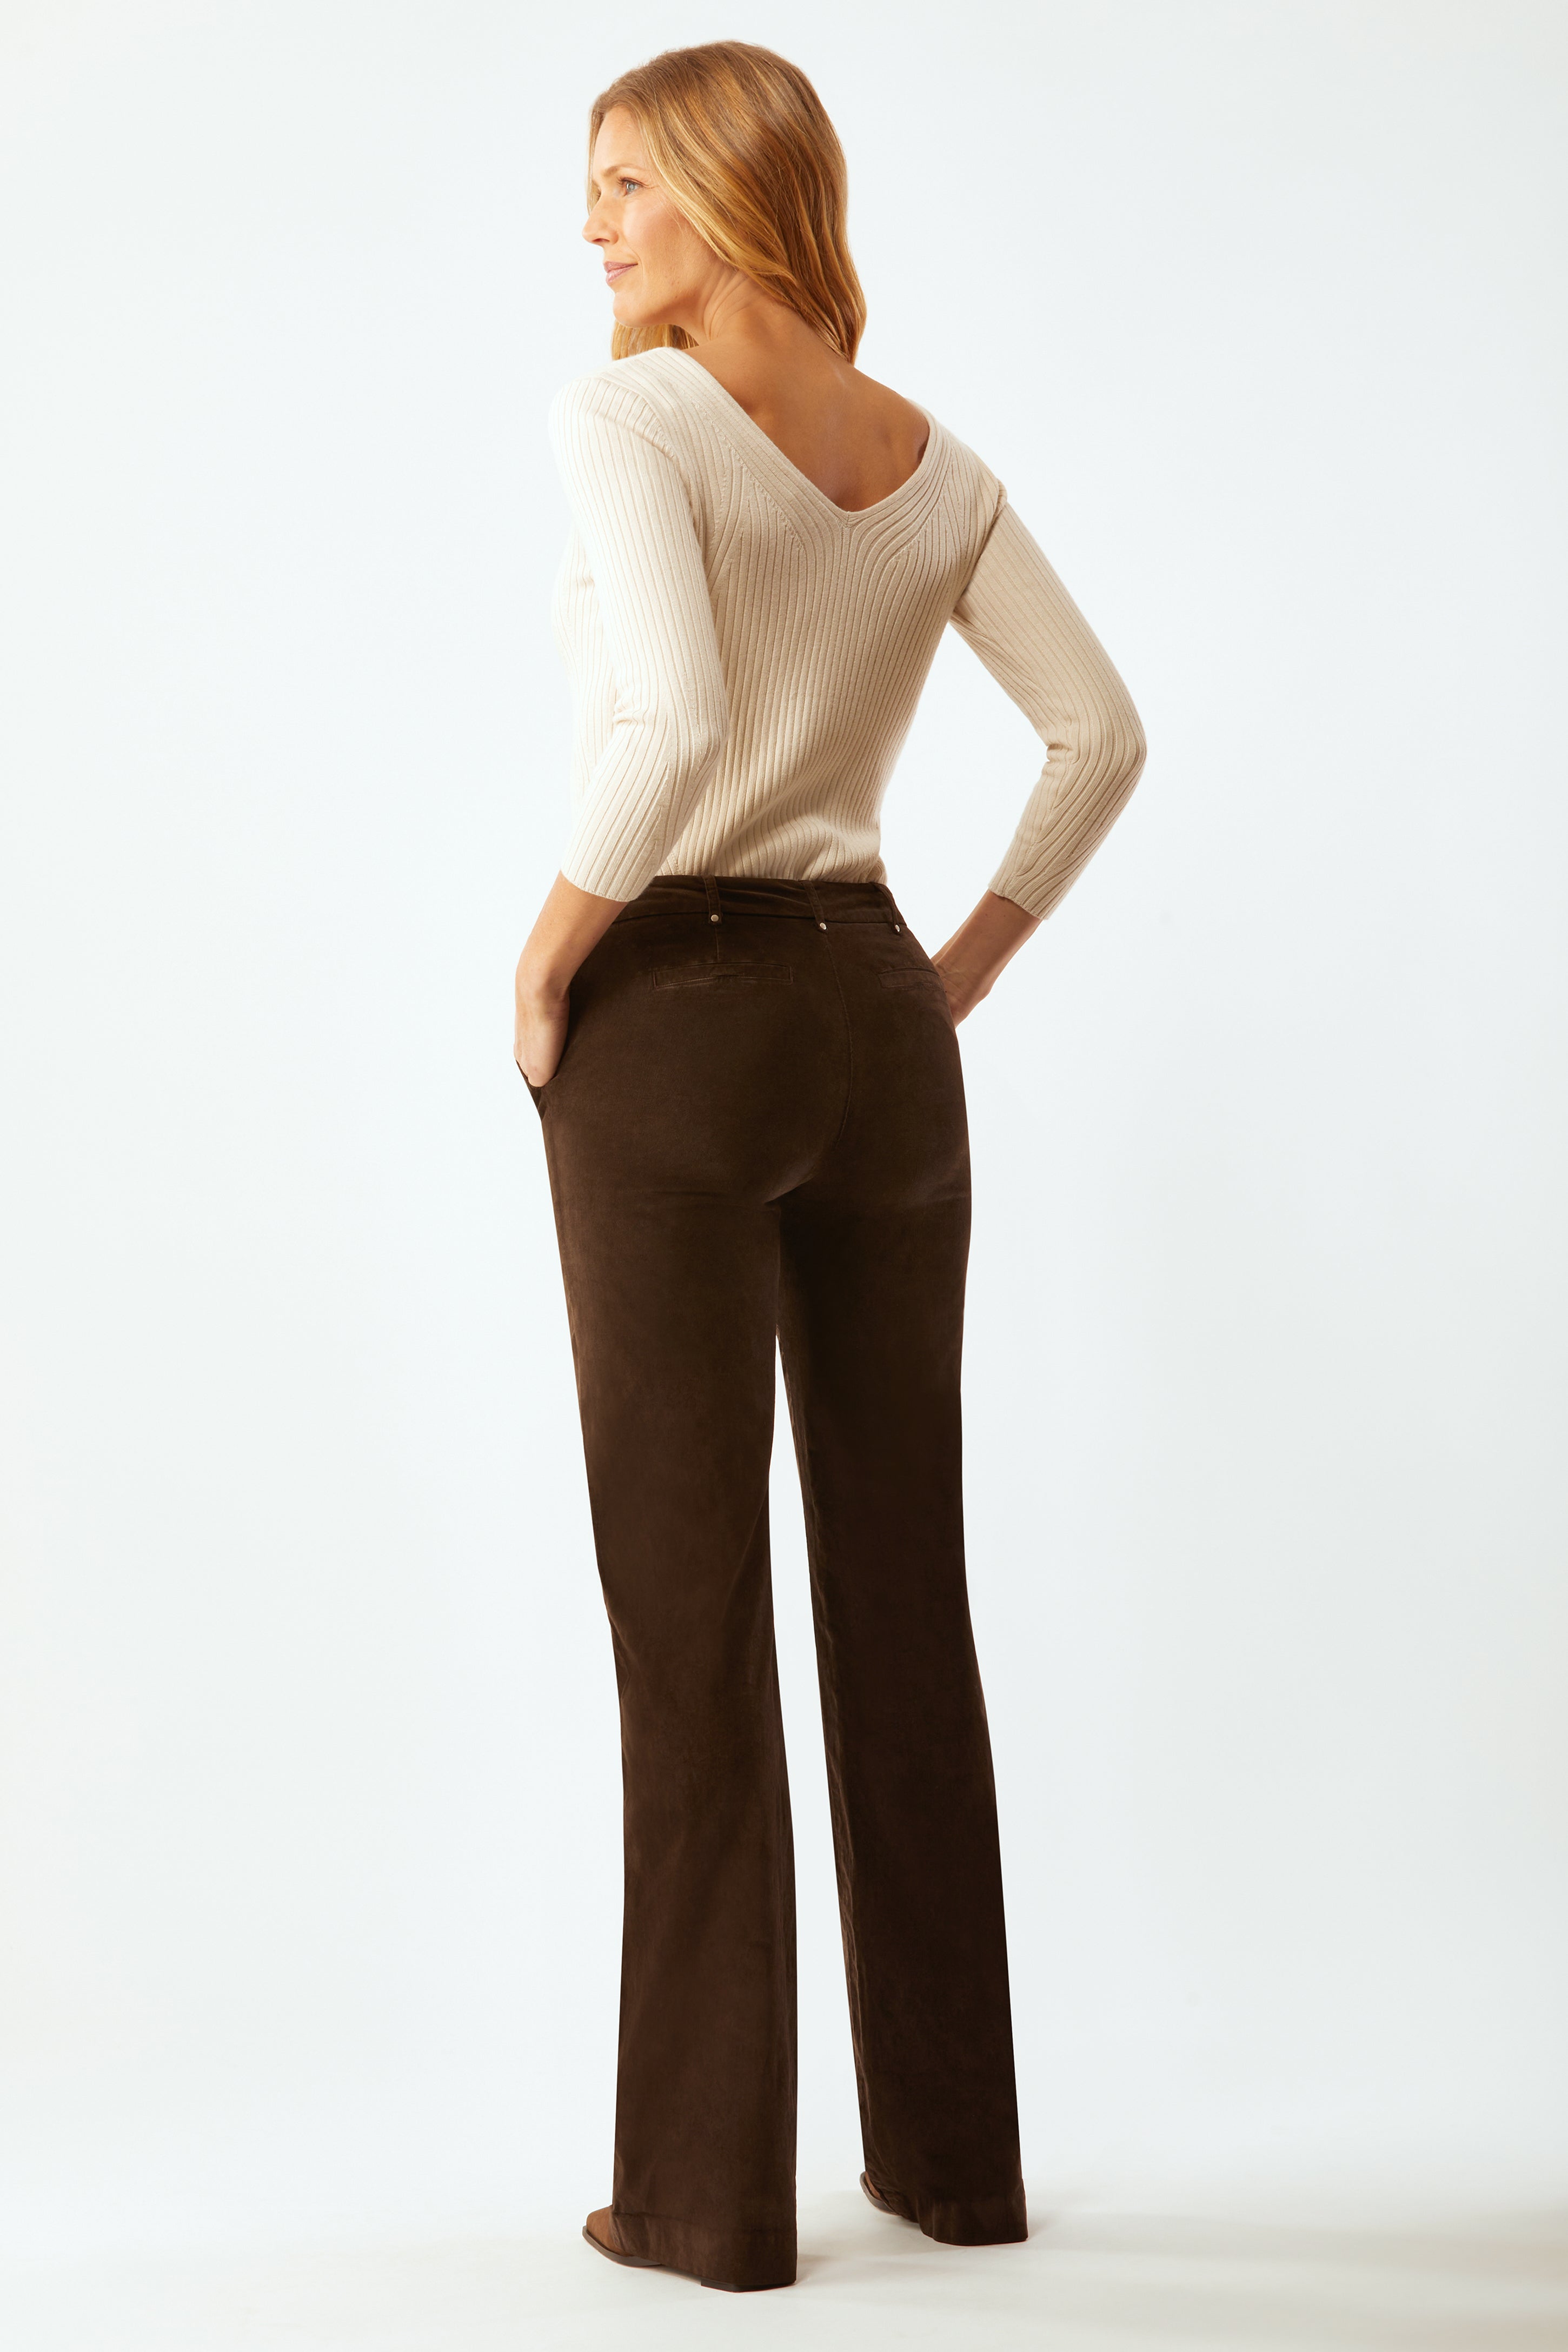 Women's Après Cord Slacks | Comfortable pants in soft, stretchy corduroy.